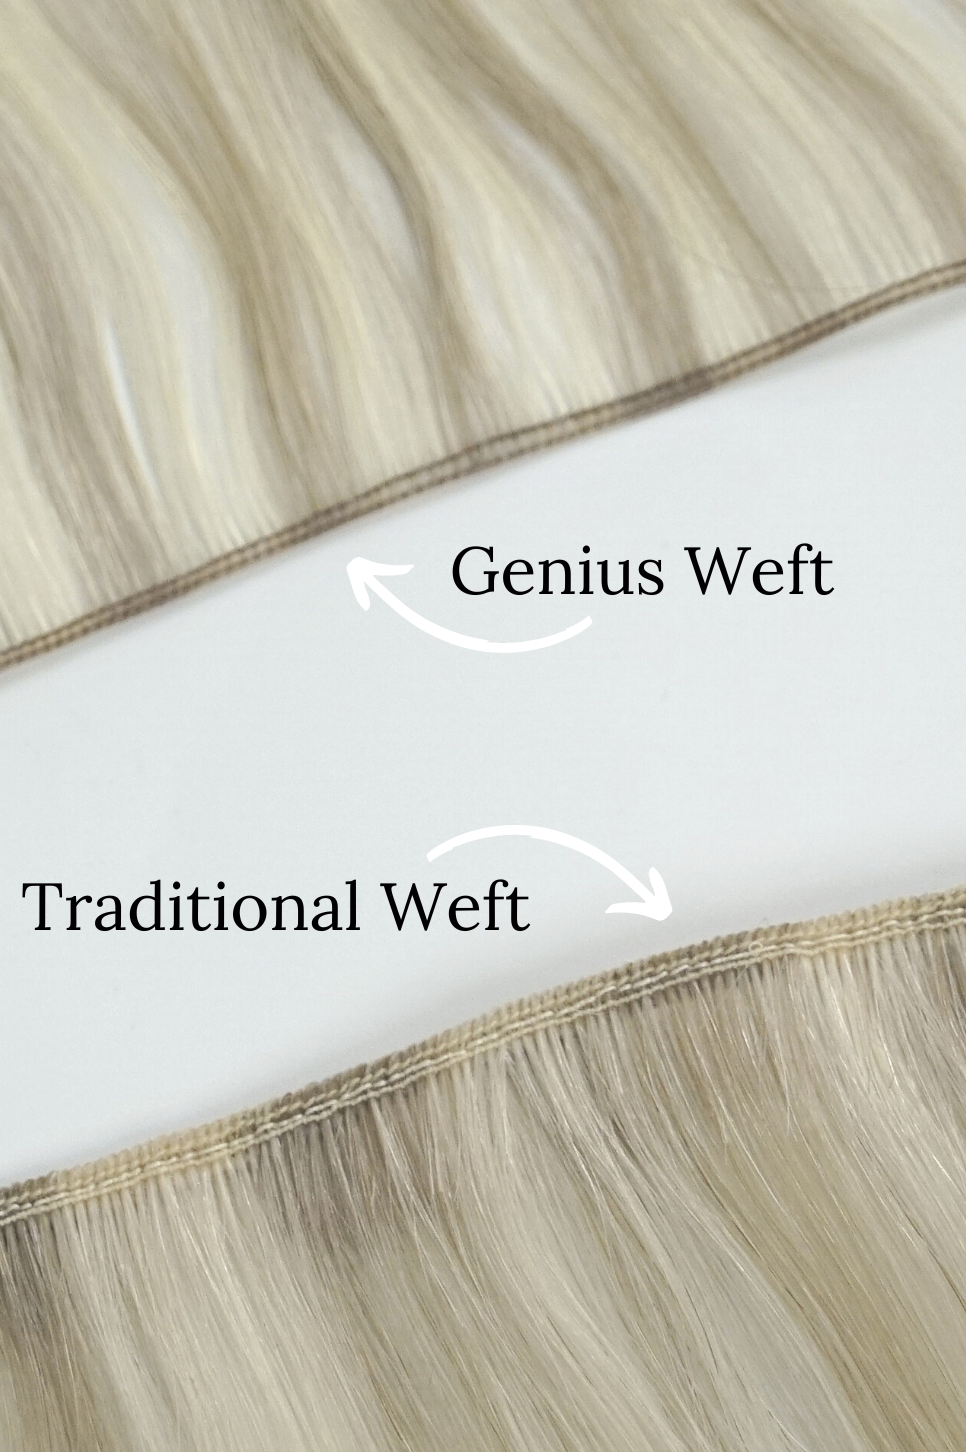 #18/60 Pearl Ash Blonde Highlights Genius Weft Hair Extensions